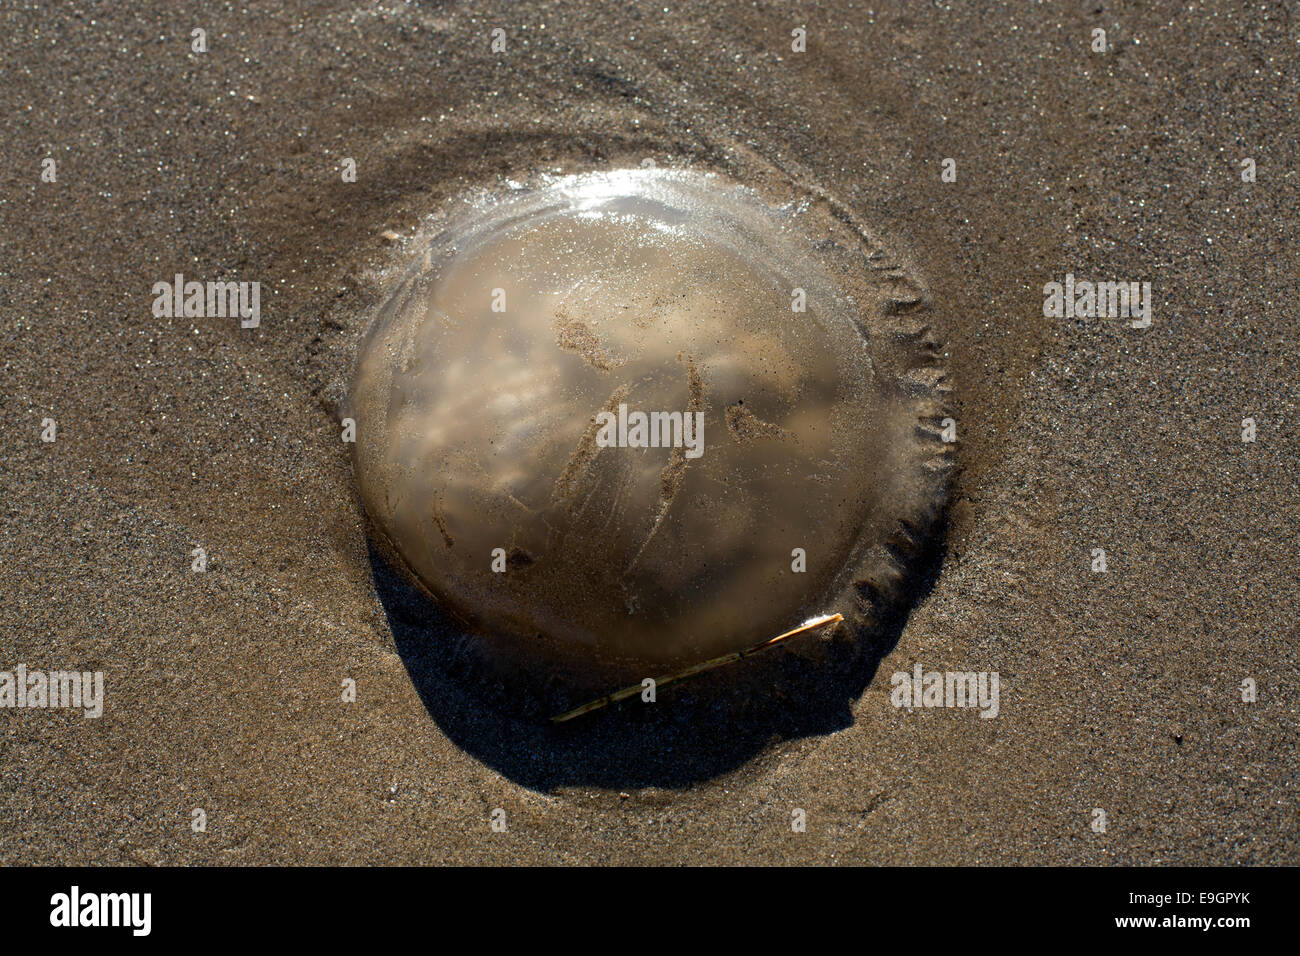 Jellyfish round on beach transparent sand sandy Stock Photo